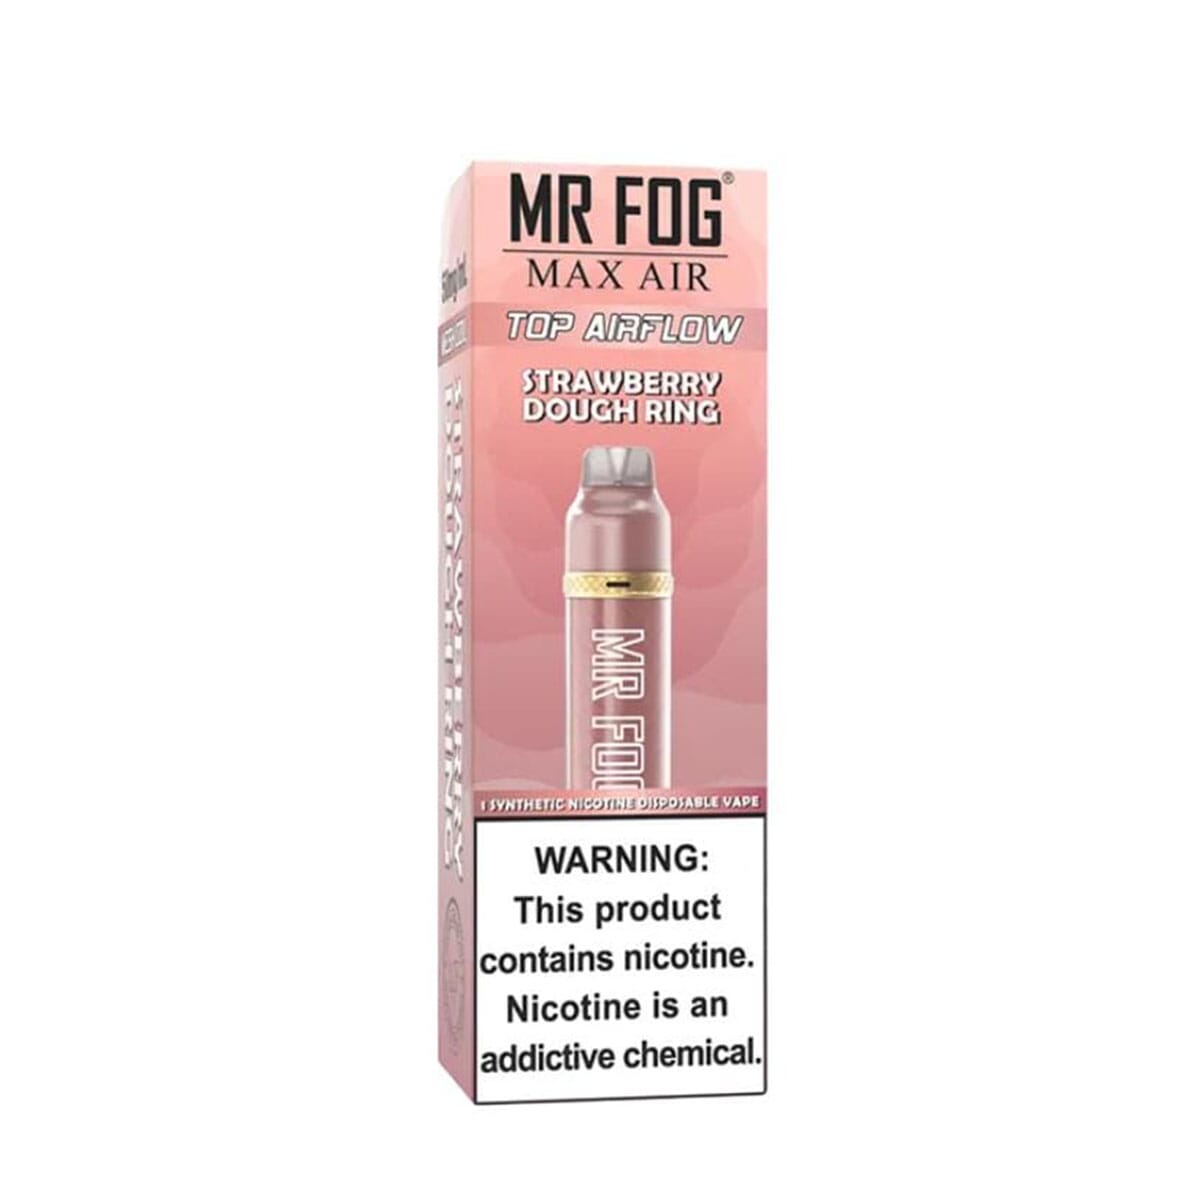 Mr. Fog Max Air Strawberry Dough Ring Disposable Vape Pen Disposable Mr. Fog Max Air 